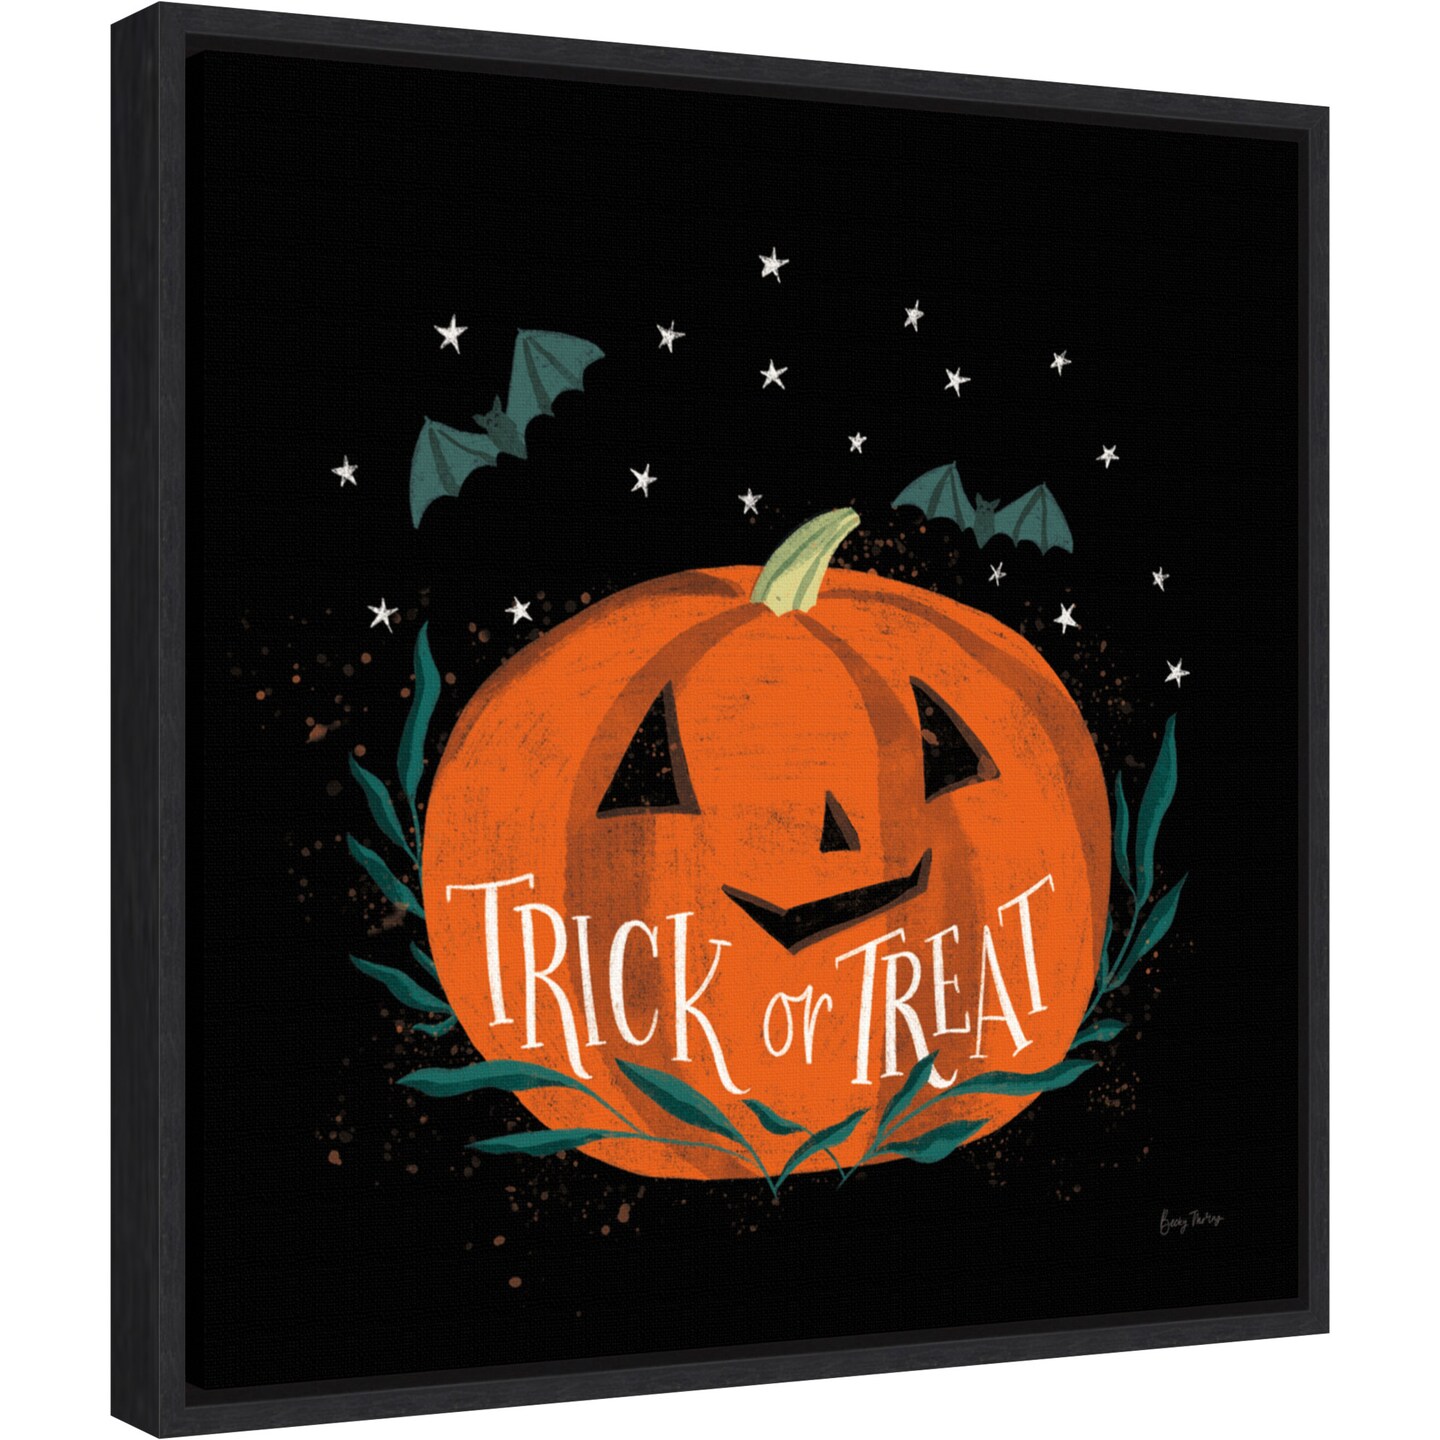 Cute Halloween II by Becky Thorns 16-in. W x 16-in. H. Canvas Wall Art Print Framed in Black